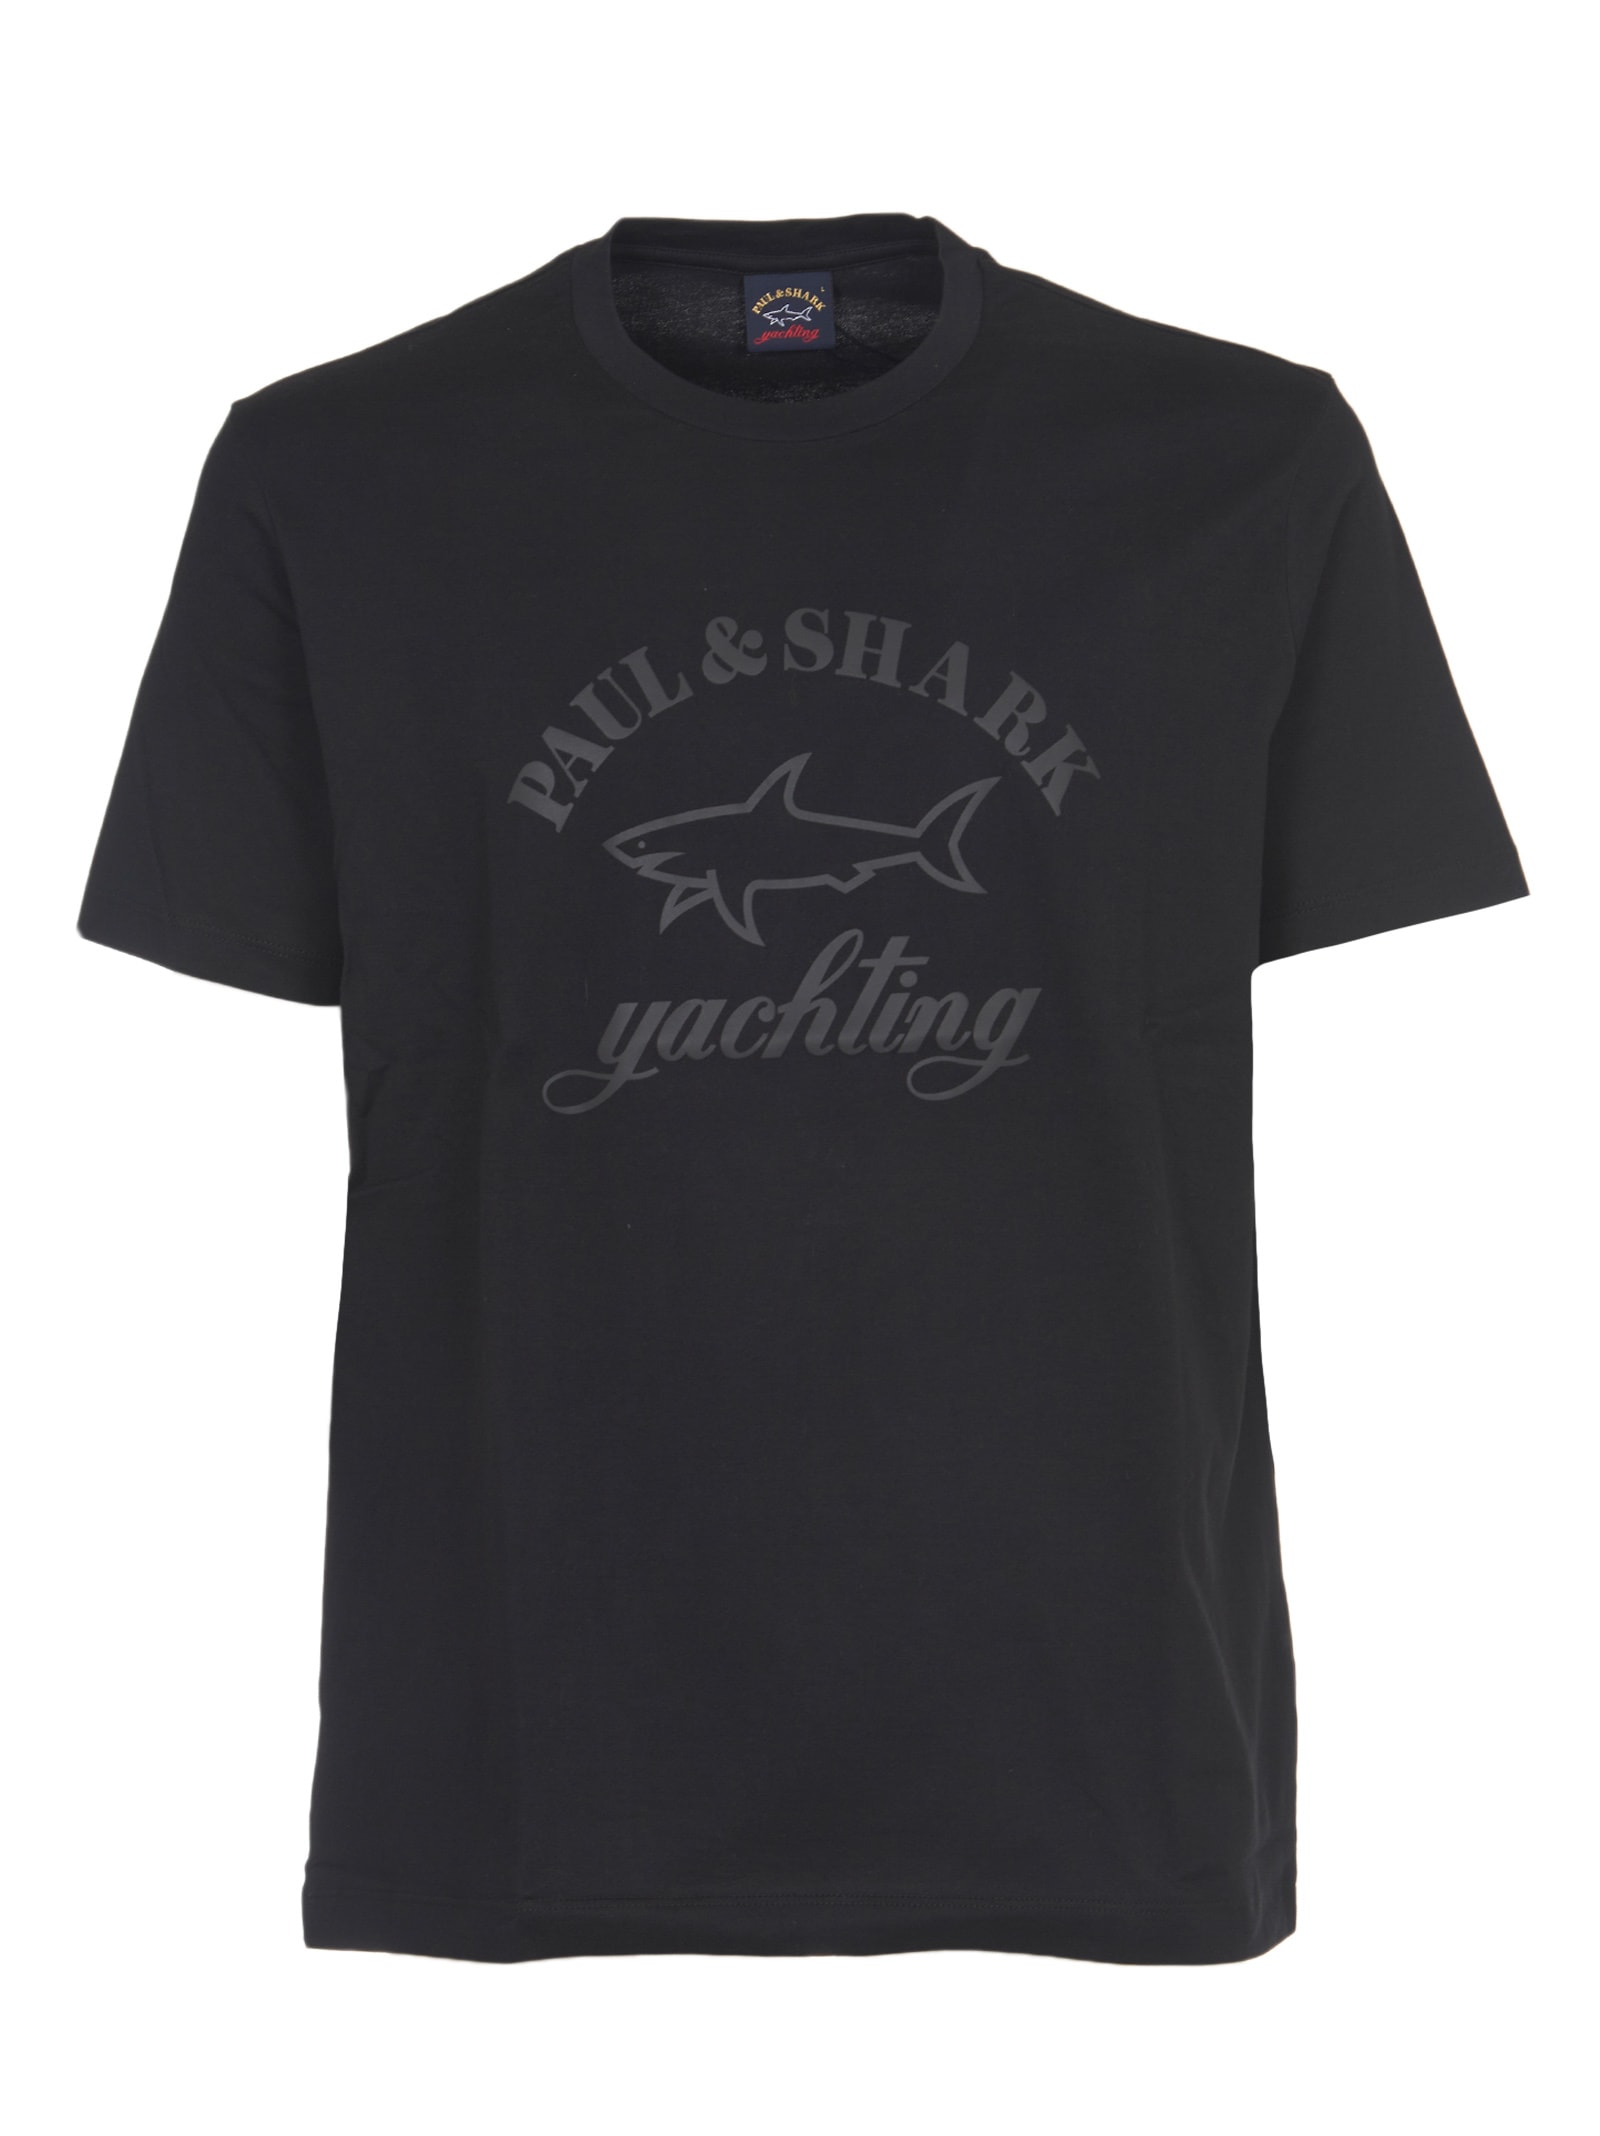 Paul & Shark Black T-shirt With Logo